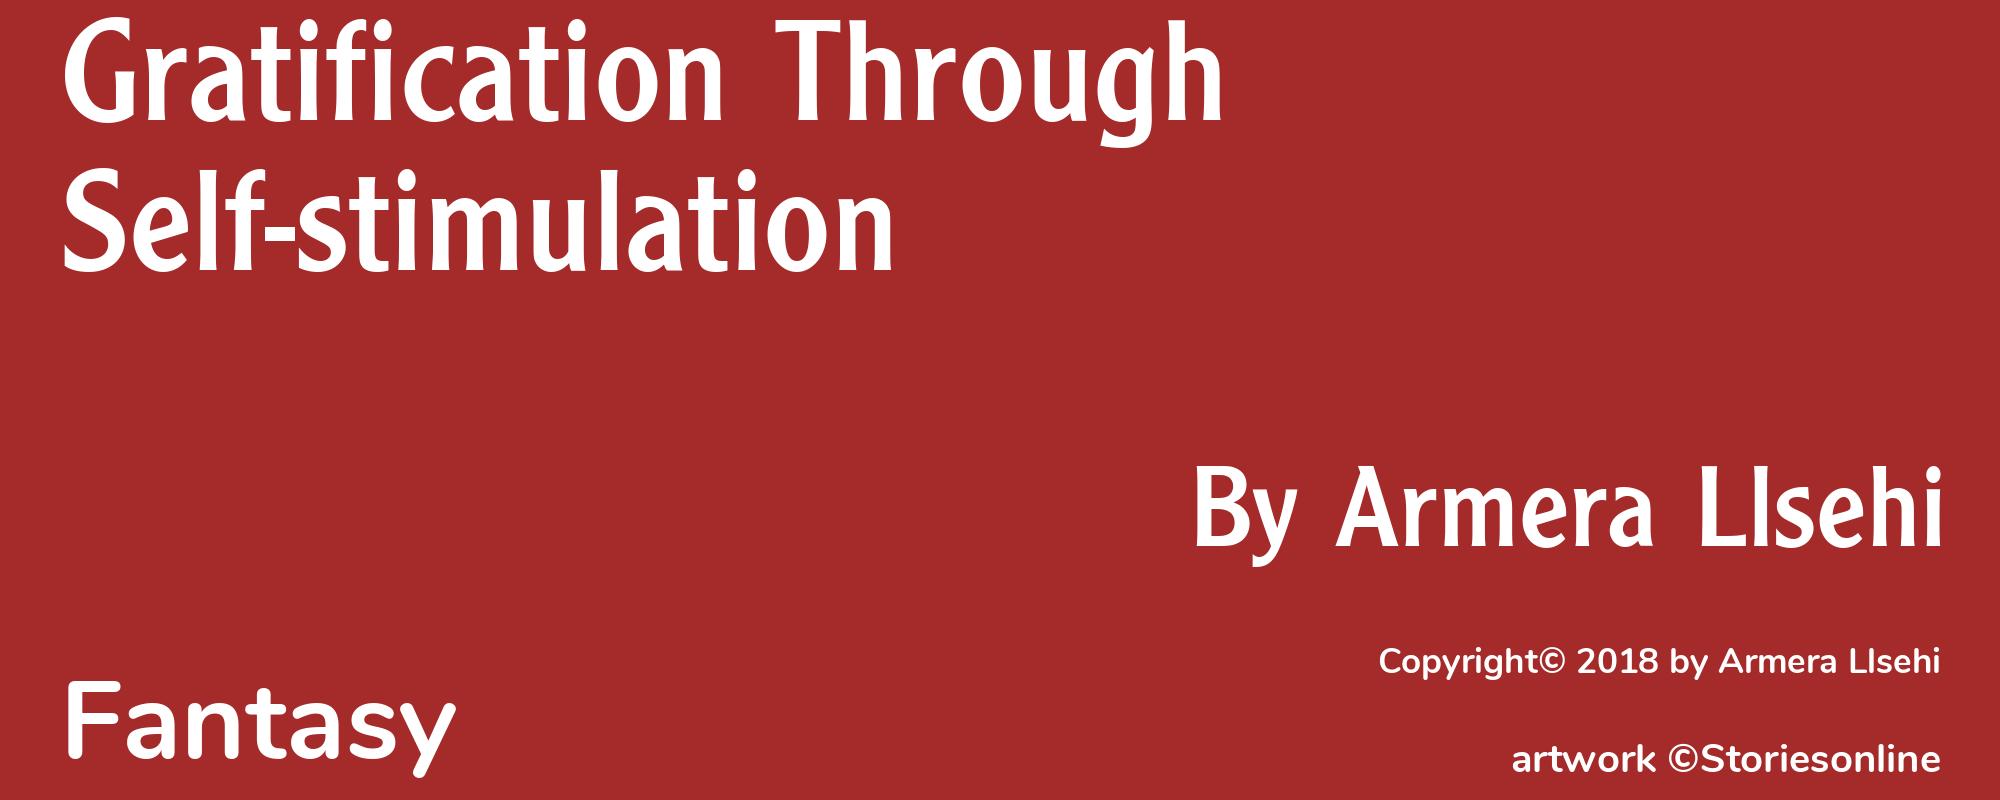 Gratification Through Self-stimulation - Cover